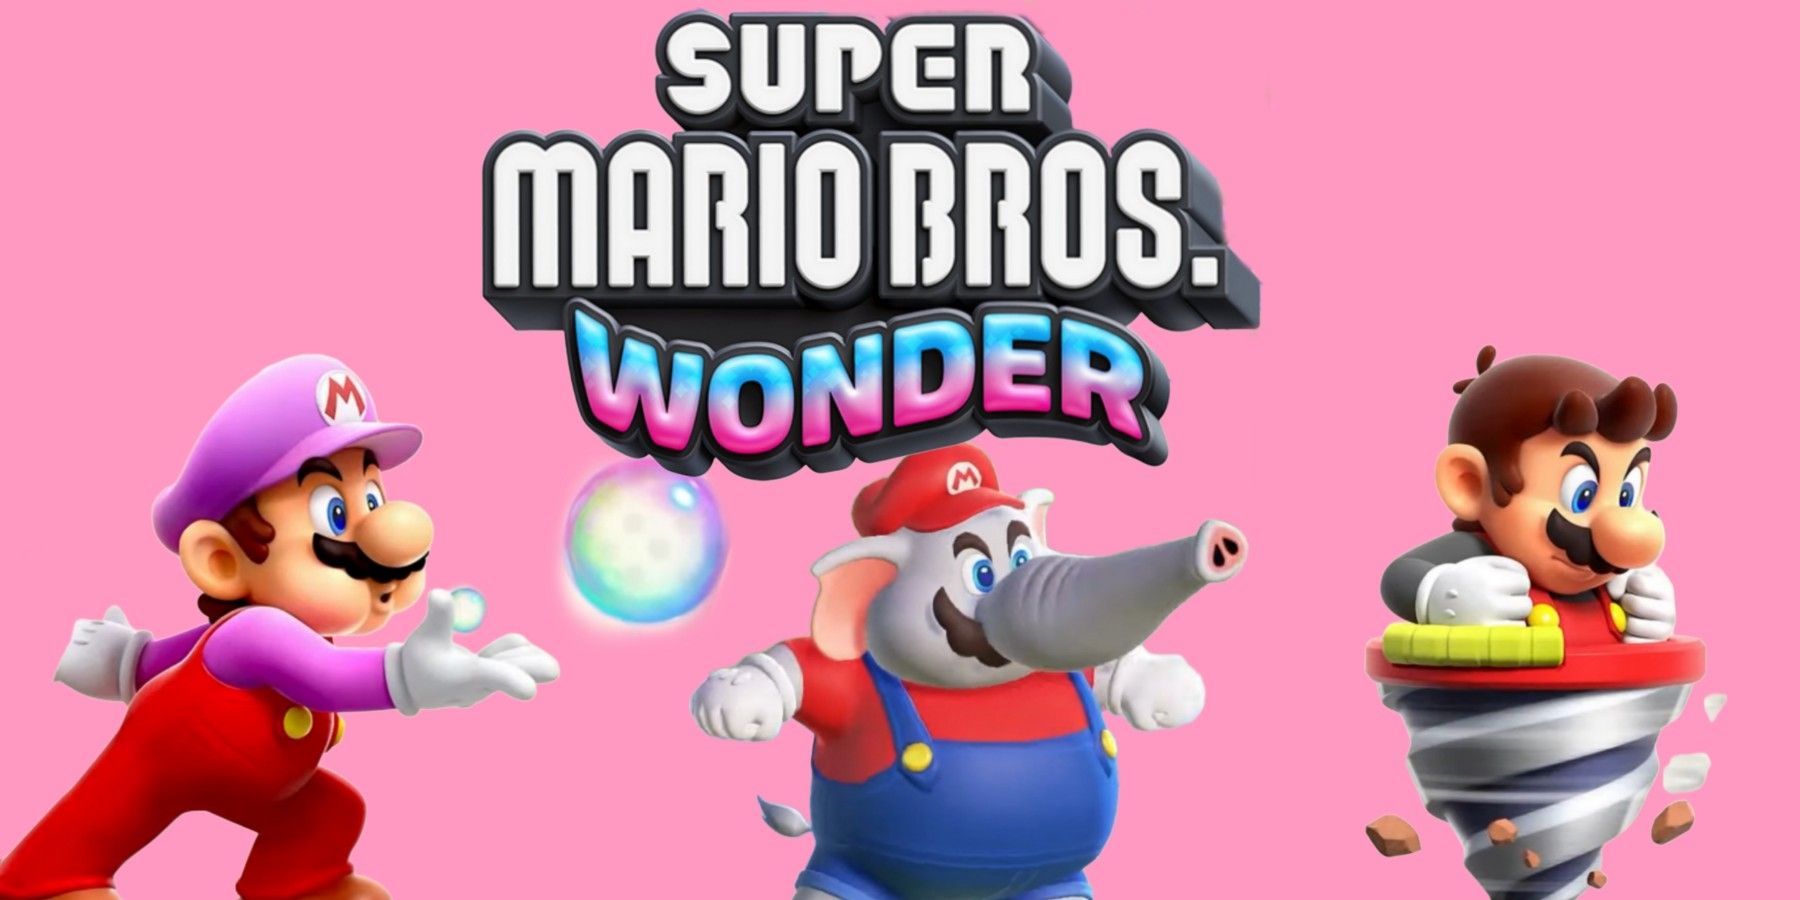 Super Mario Bros. Wonder: Every Ability